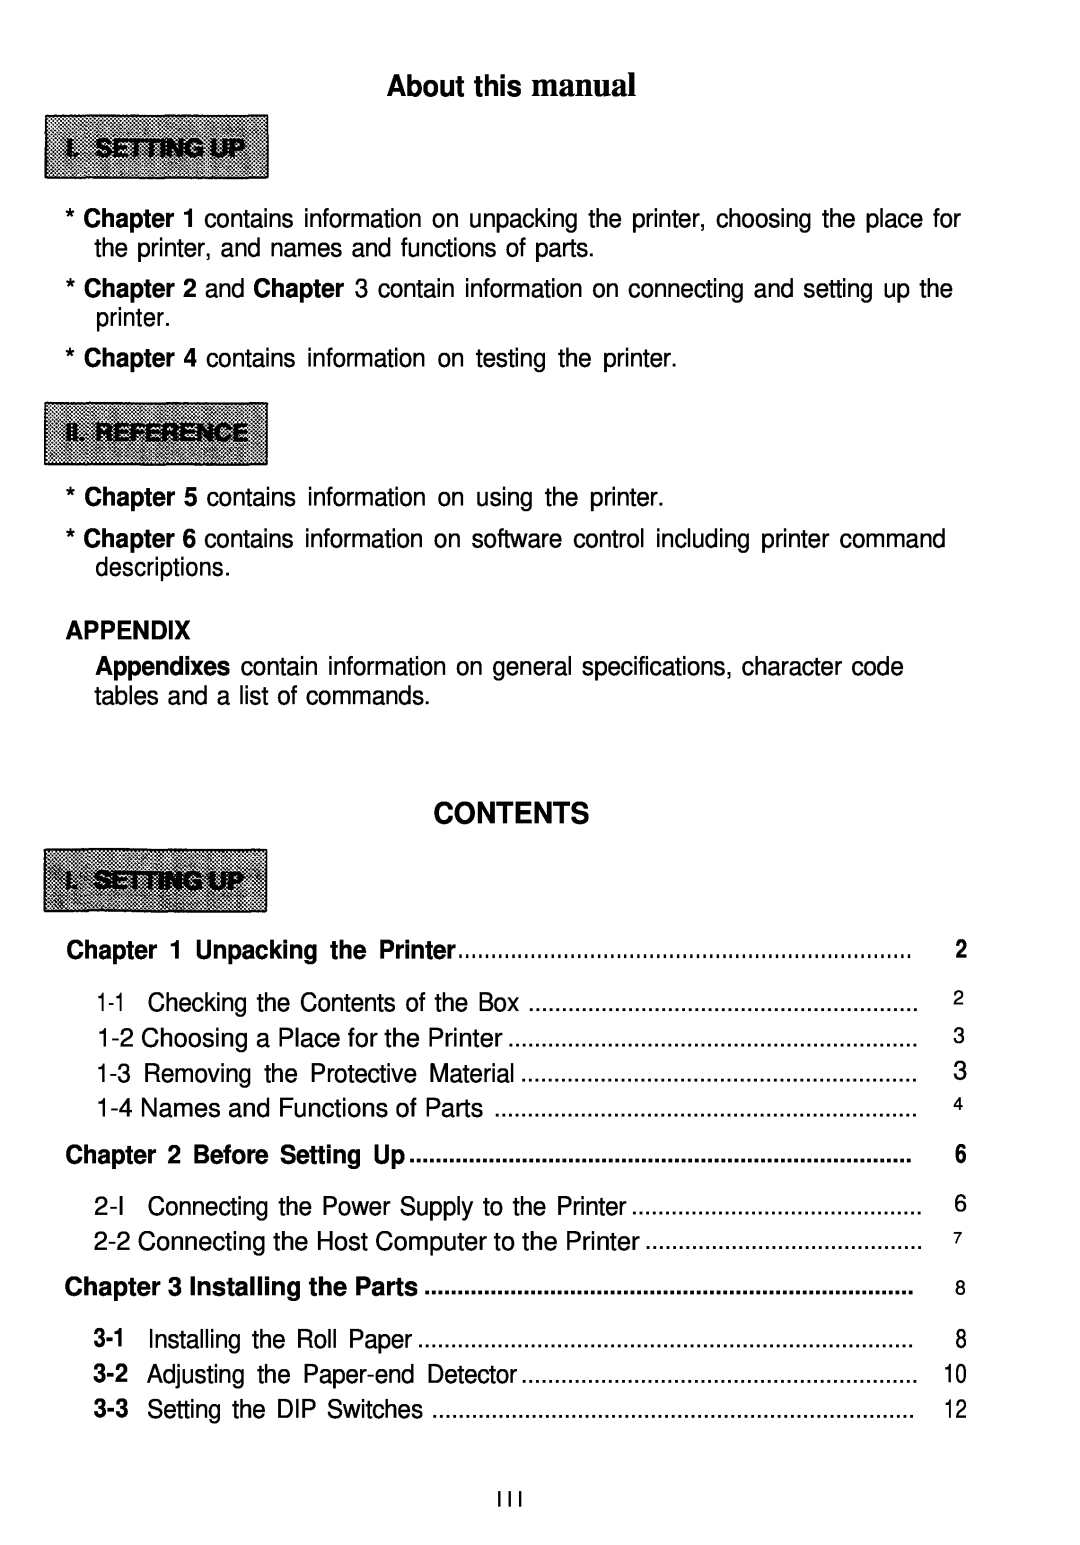 Seiko Group TM-L60 About this manual, Contents, Appendix 